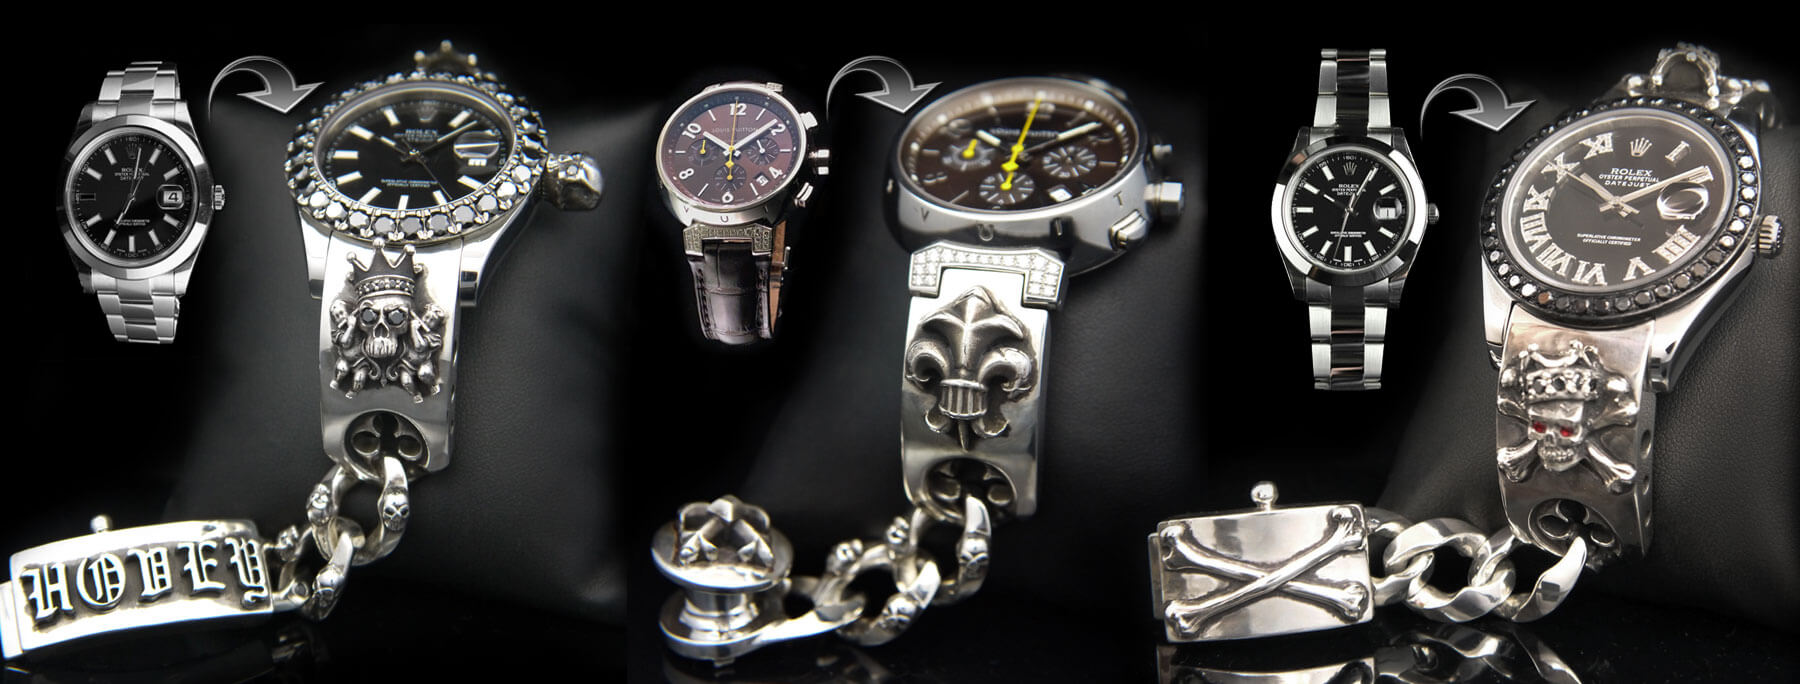 customized-watch-steel-band